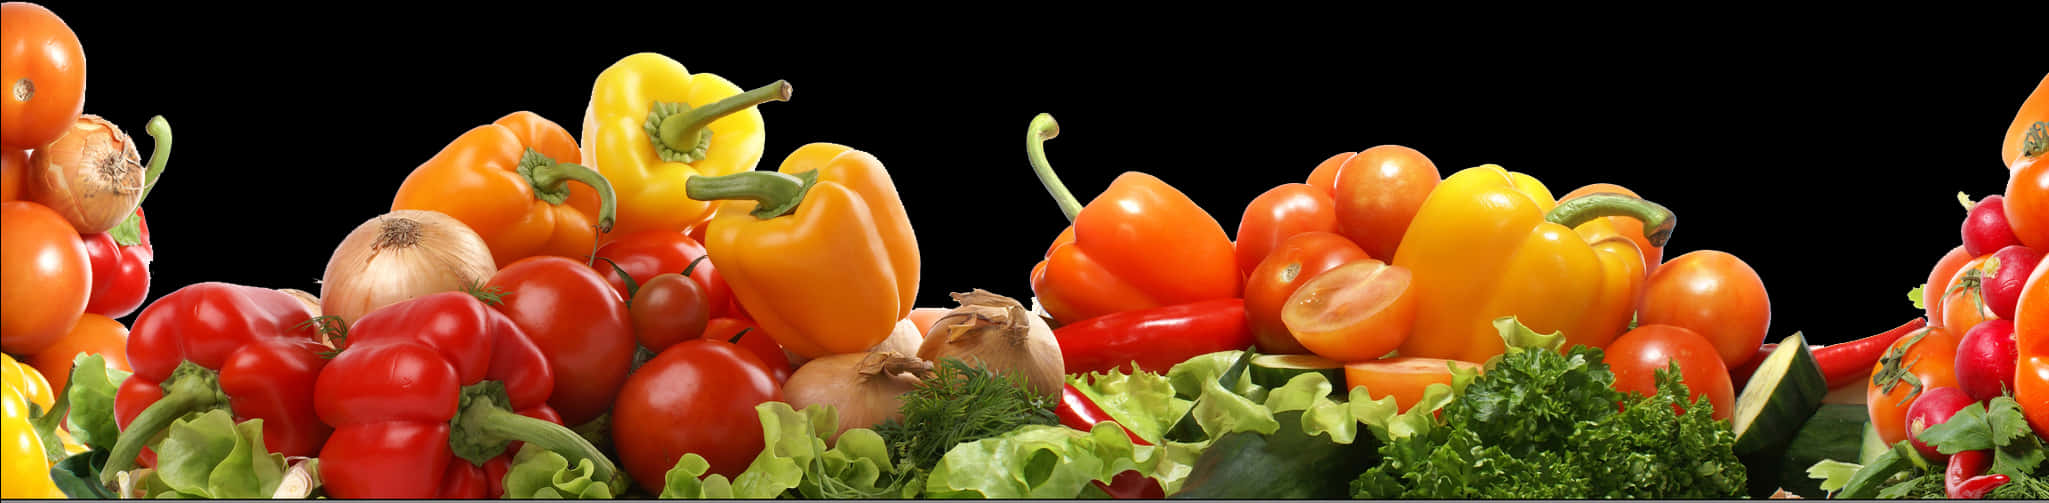 Colorful Assortmentof Fresh Vegetables Banner PNG image